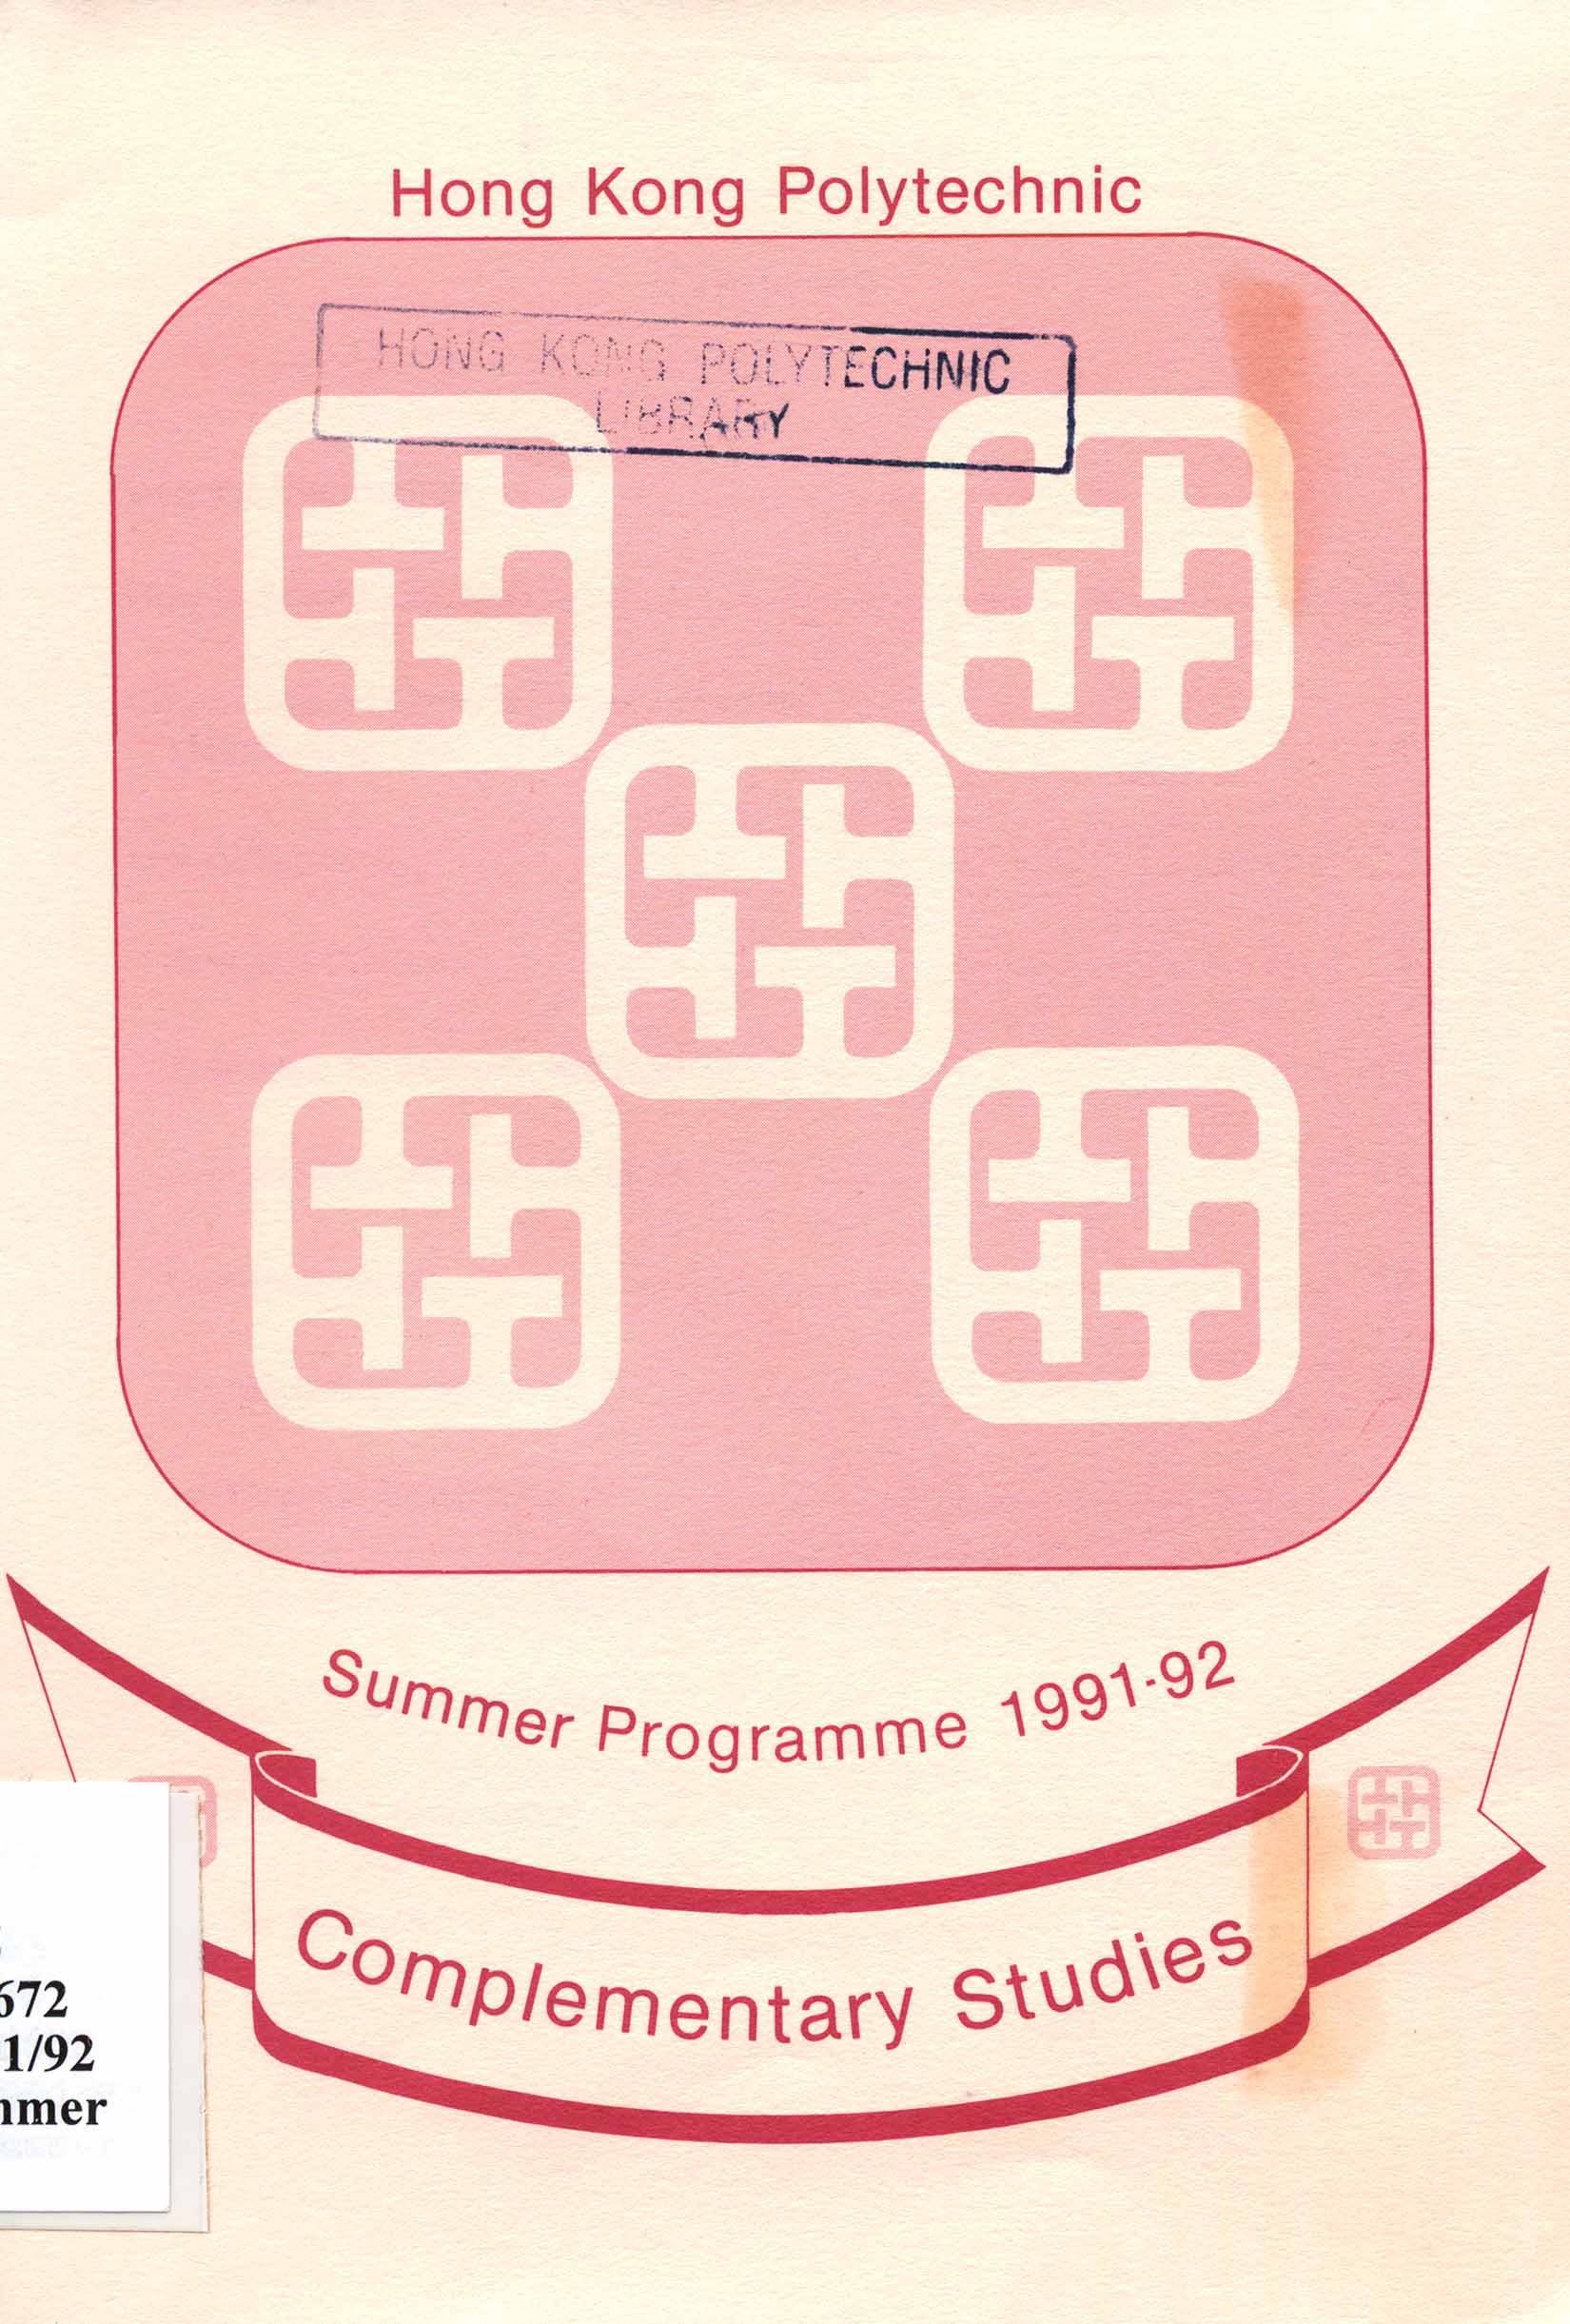 Complementary studies summer programme 1991-92